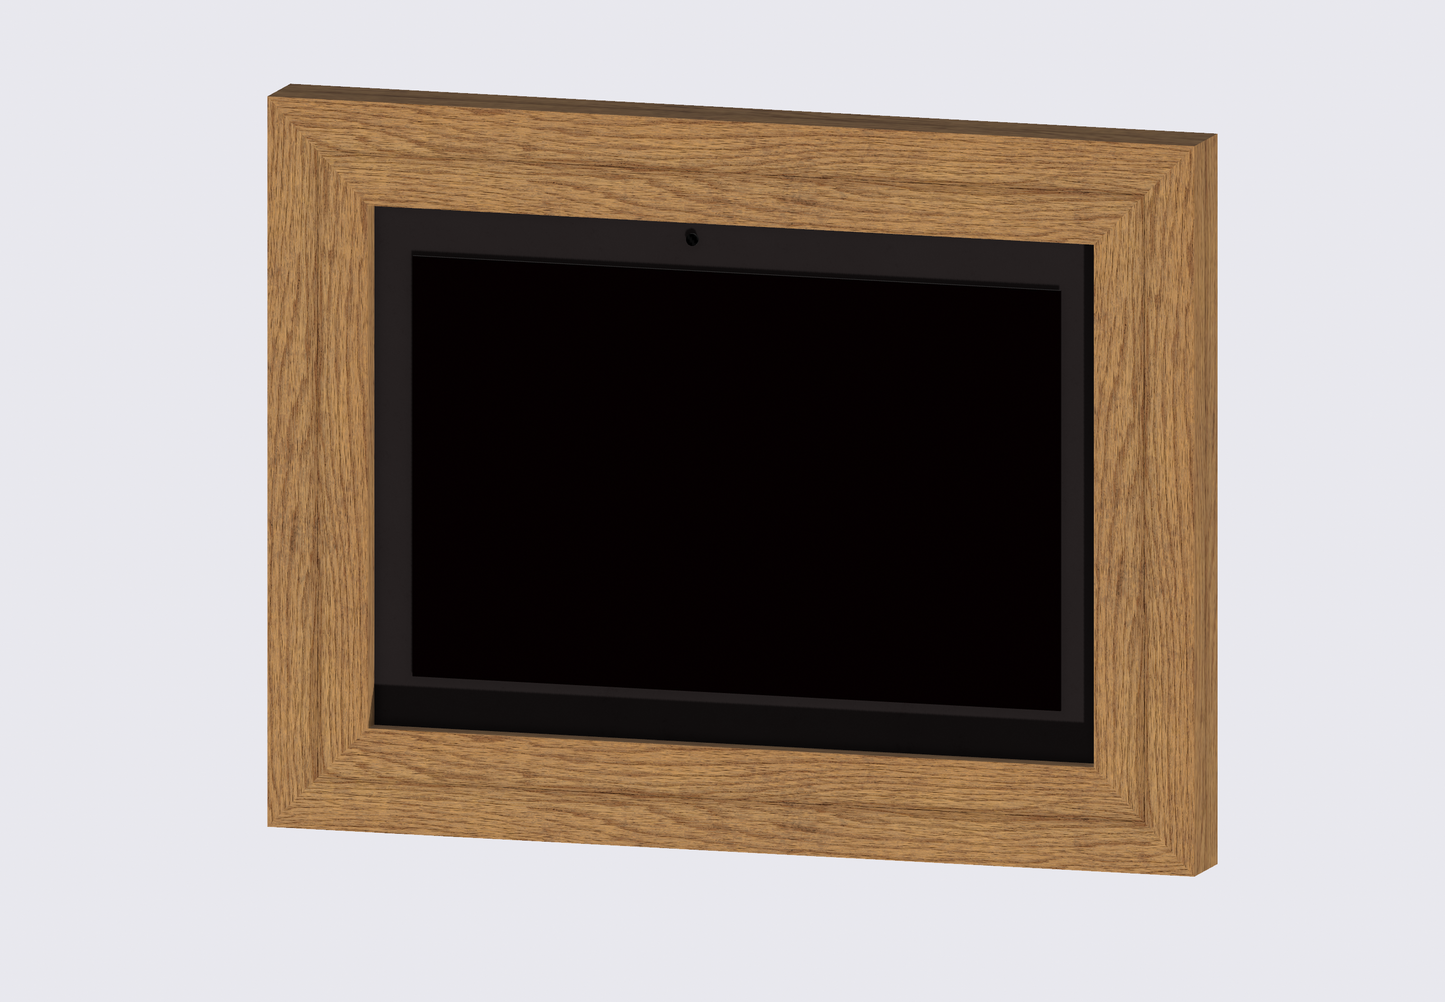 Oak frames that fits a 10-inch Elo tablet (3 pieces)